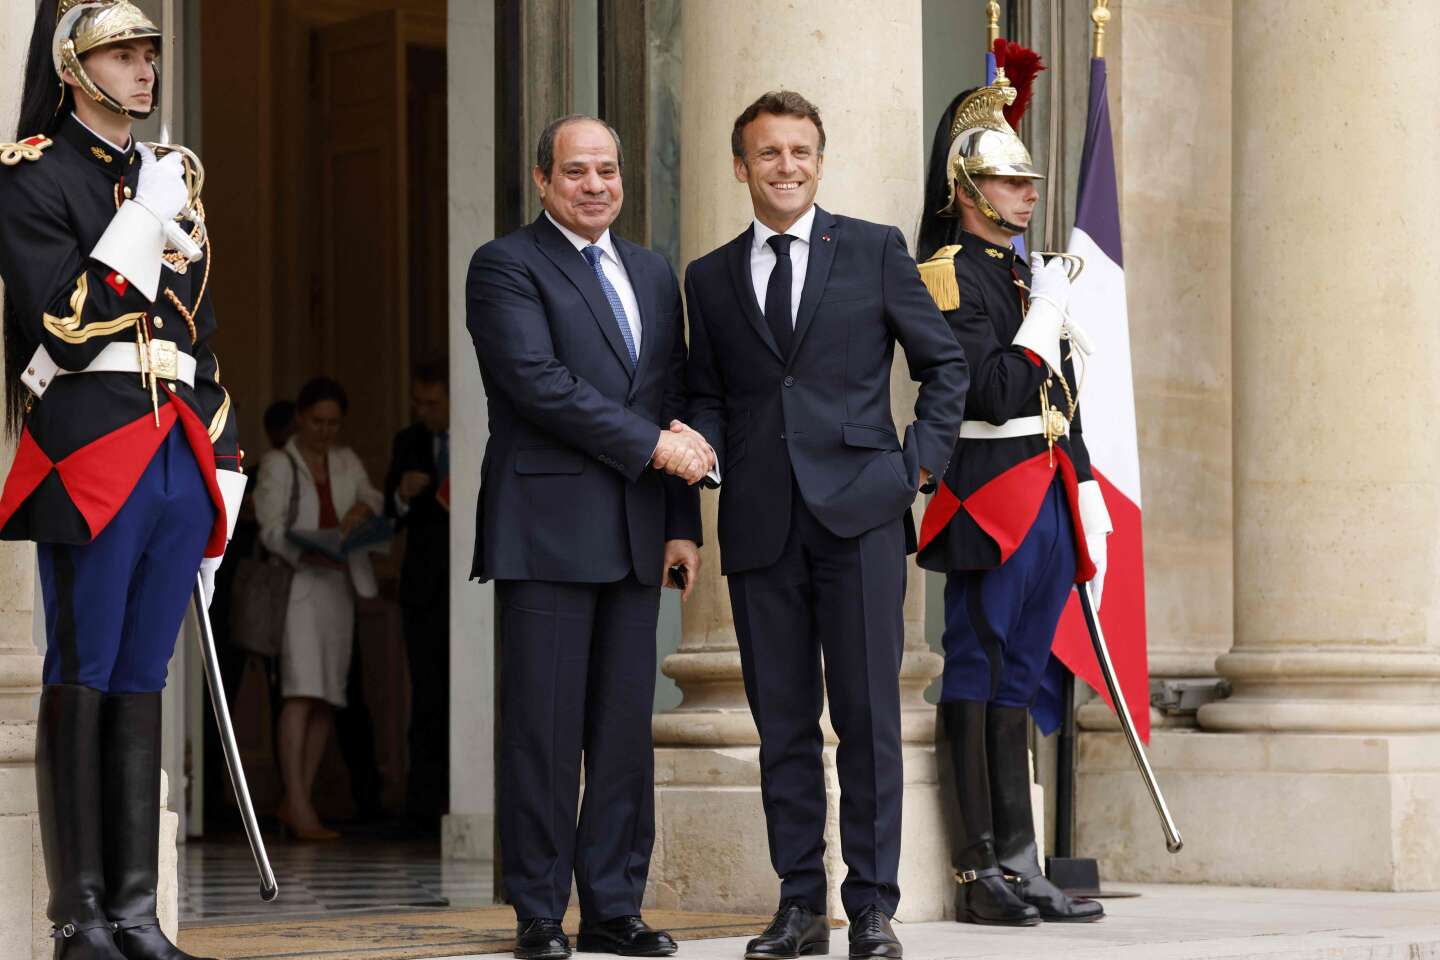 Abdel Fattah Al-Sissi was received by Emmanuel Macron in Paris